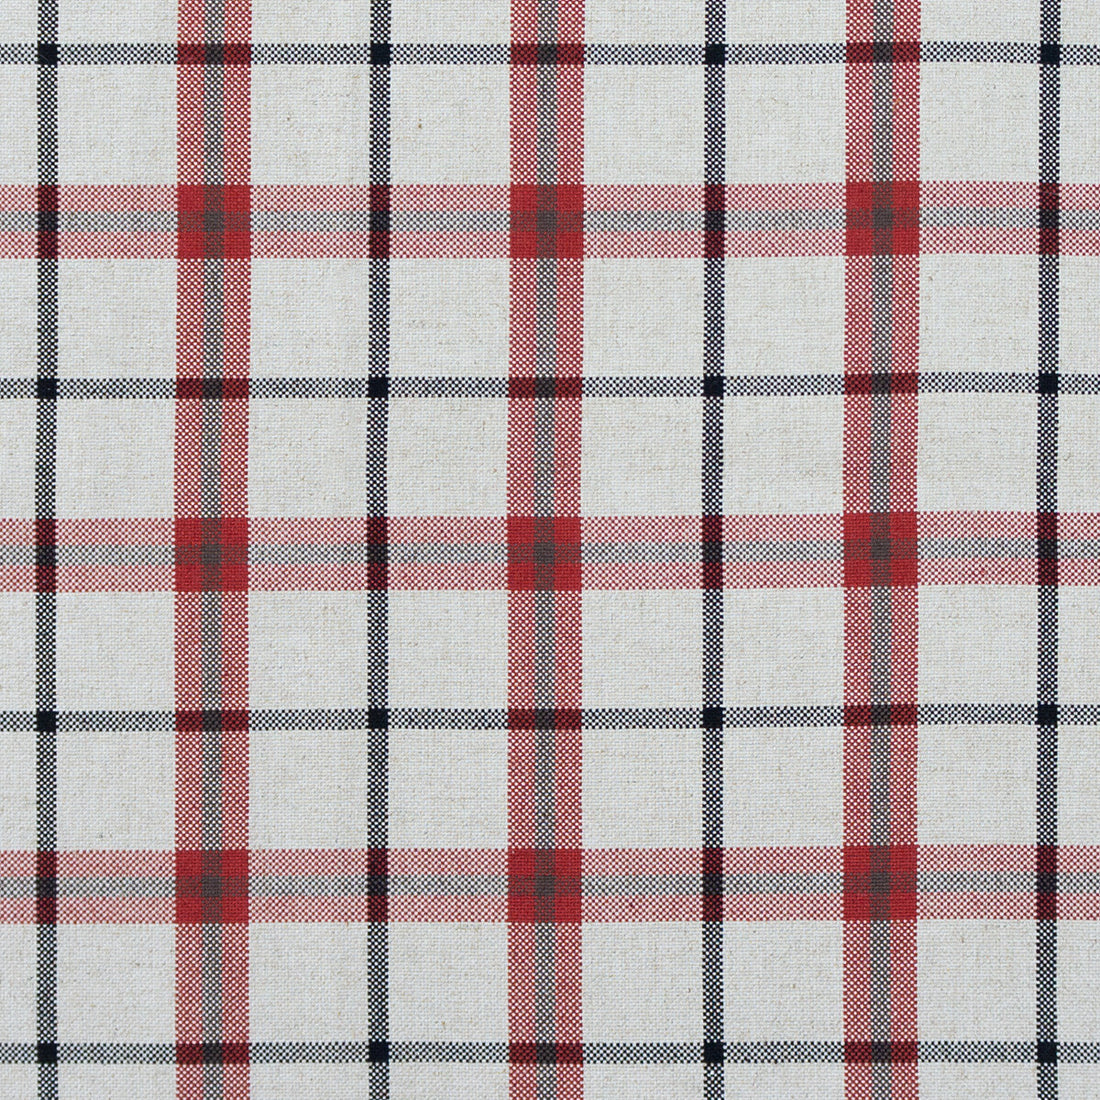 Ventura fabric in rojo color - pattern GDT5655.003.0 - by Gaston y Daniela in the Gaston Rio Grande collection